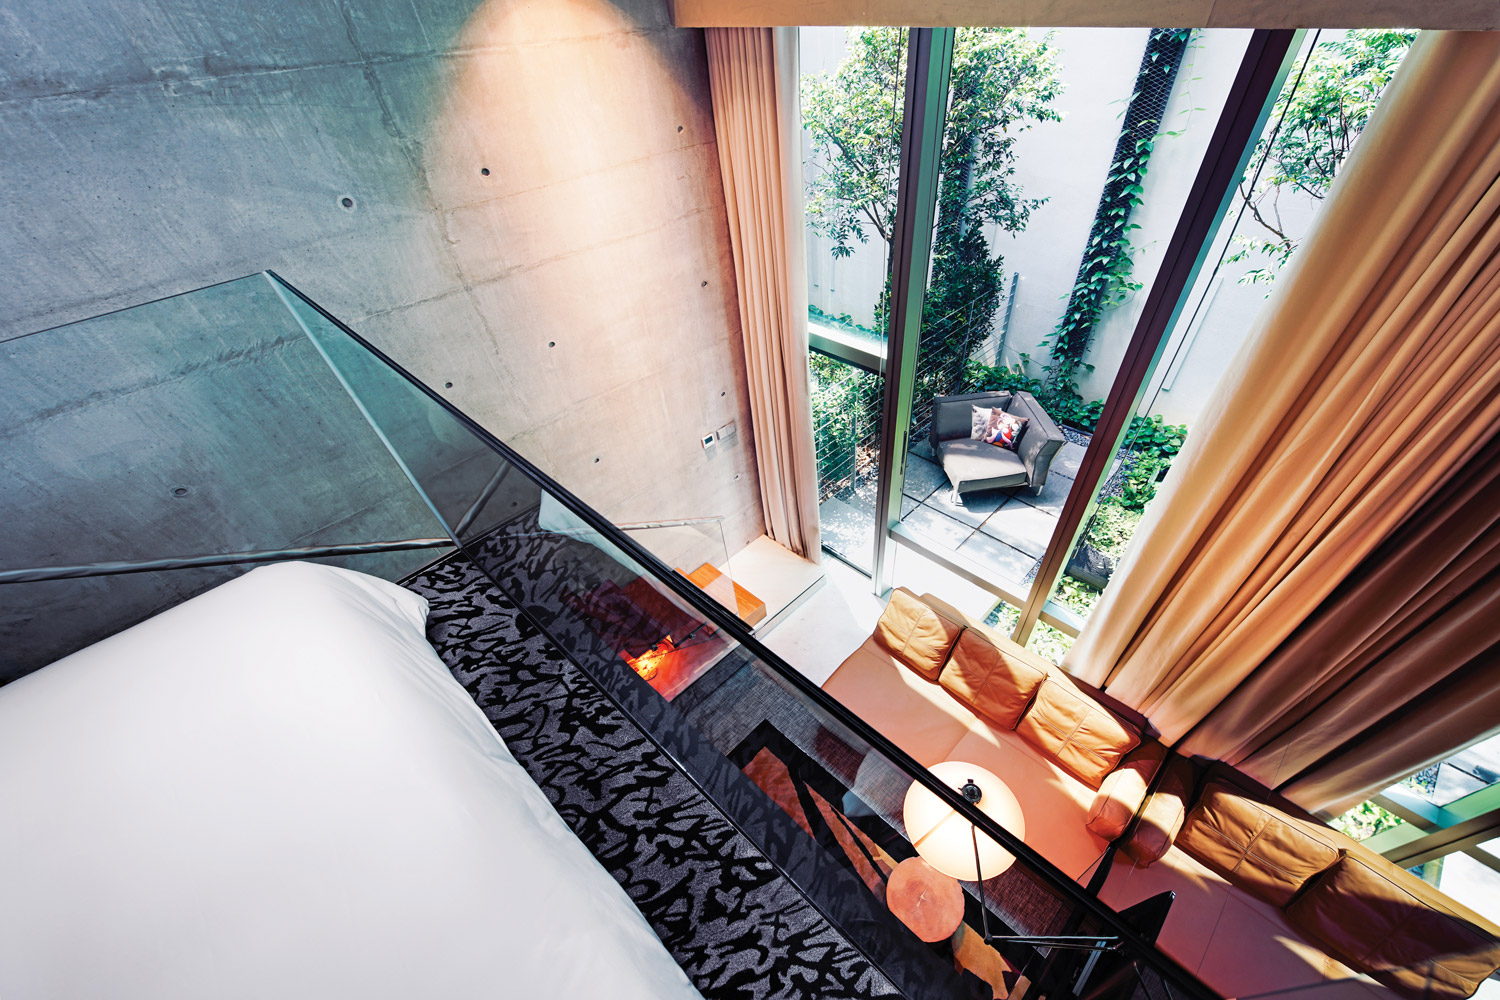 M Social & Studio M Hotel Singapore: The Gold List 2022 - Best Design Hotel